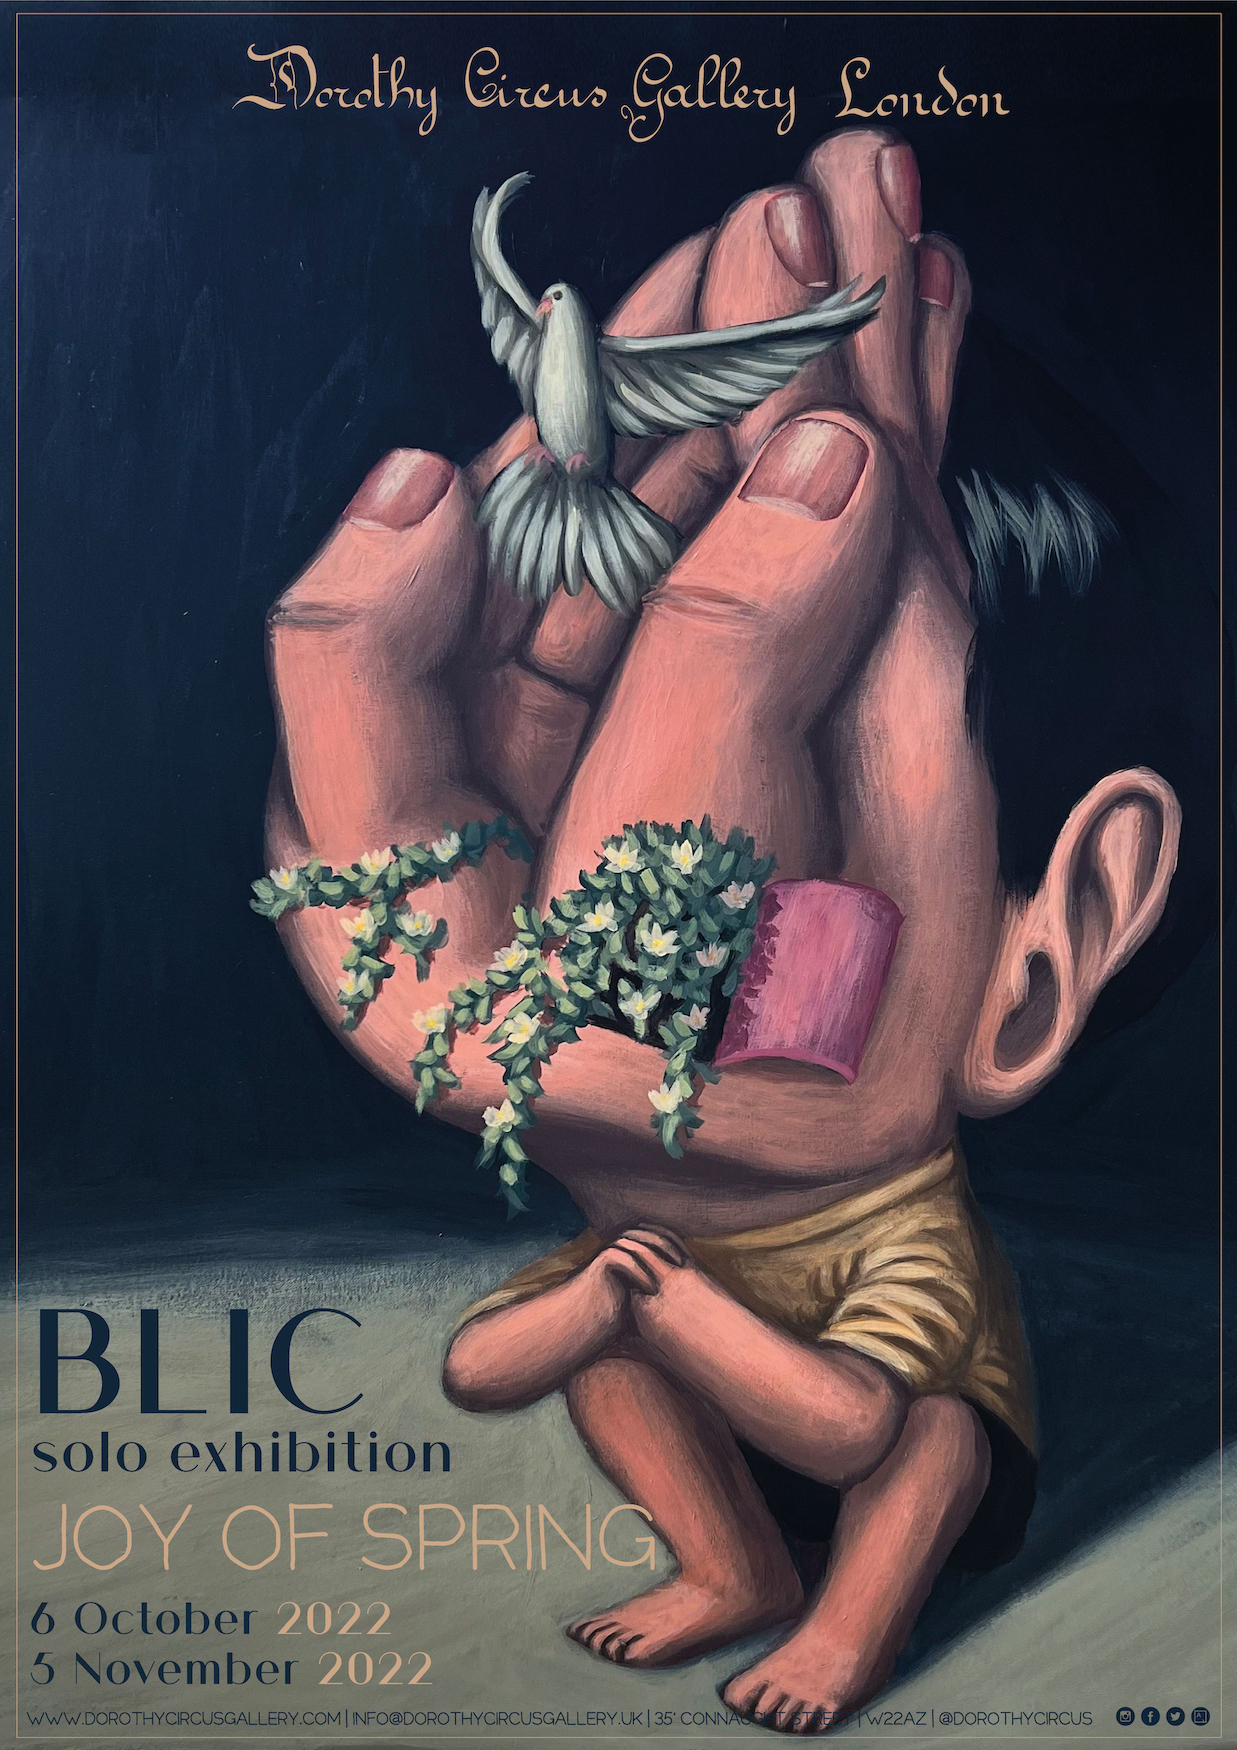 Blic Filipino artist